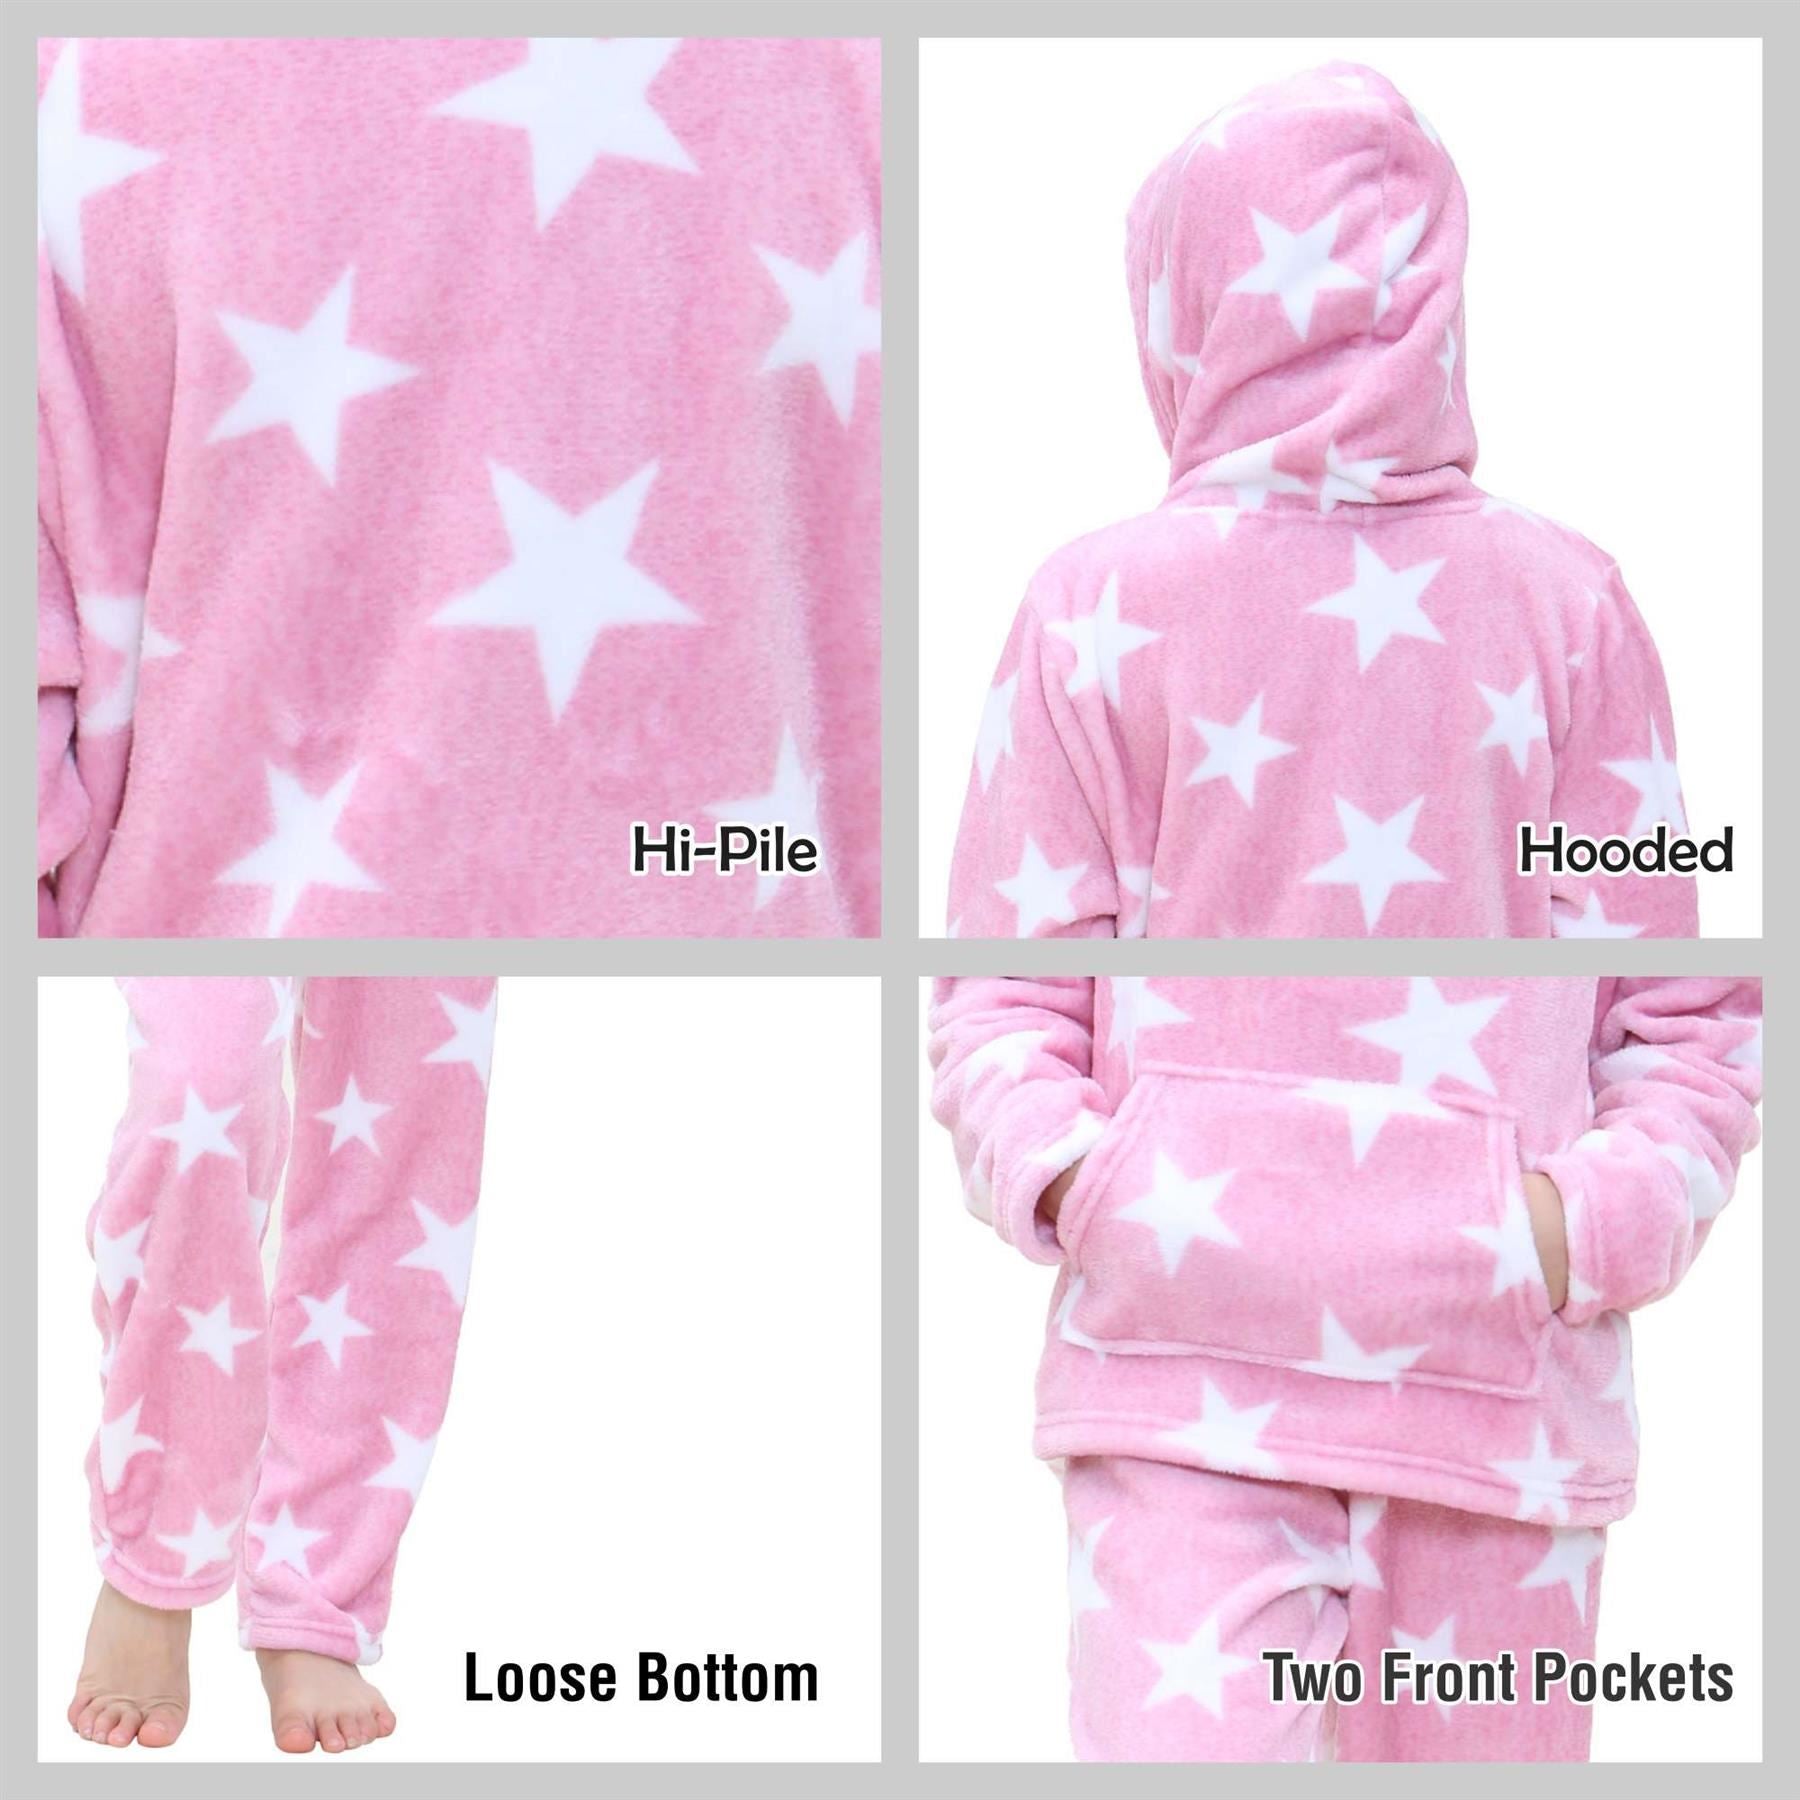 Kids Girls Stars Print Pyjama Extra Soft Flannel Fleece Hooded PJS Set